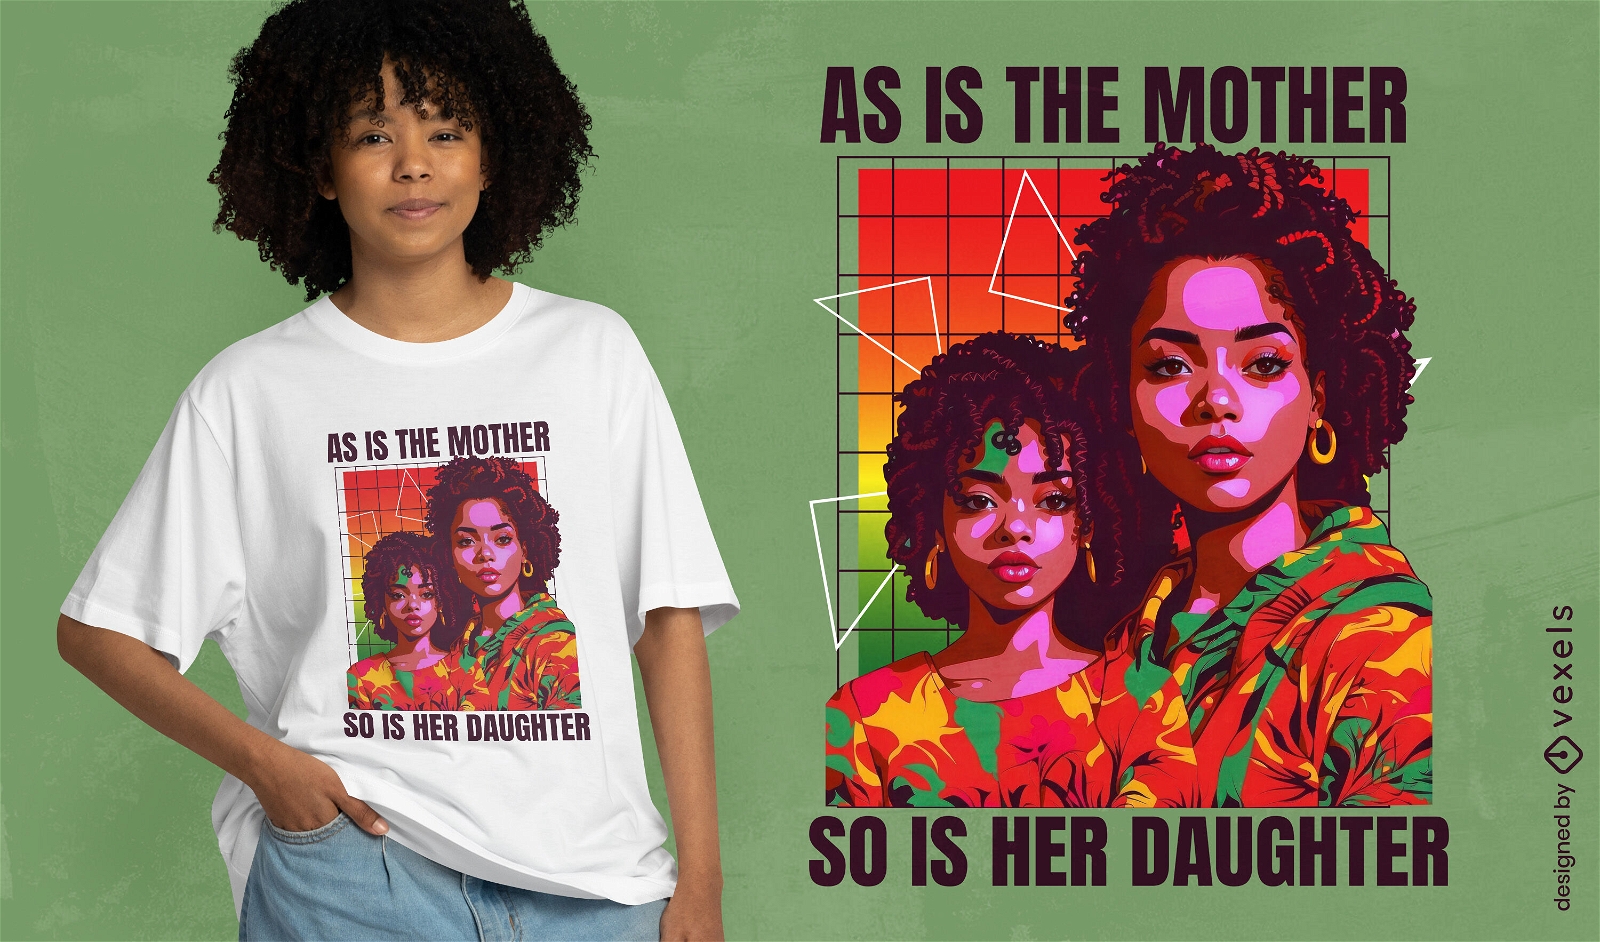 Dise?o de camiseta con cita inspiradora de madre e hija.